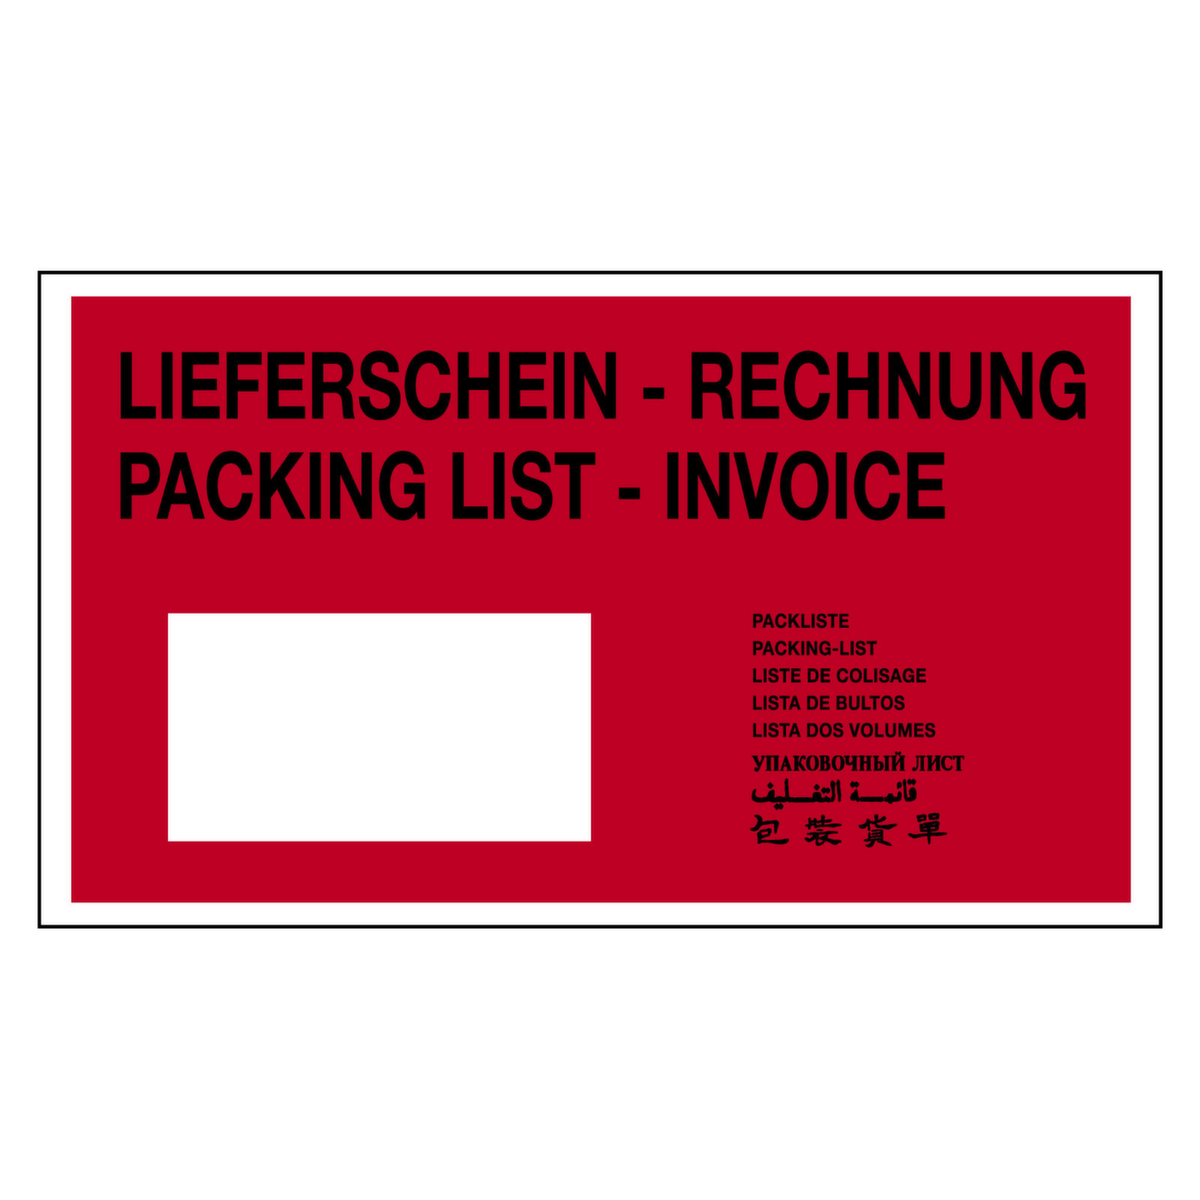 Raja Dokumententasche "Lieferschein-Rechnung/Packing list-Invoice", DIN A5 Standard 1 ZOOM